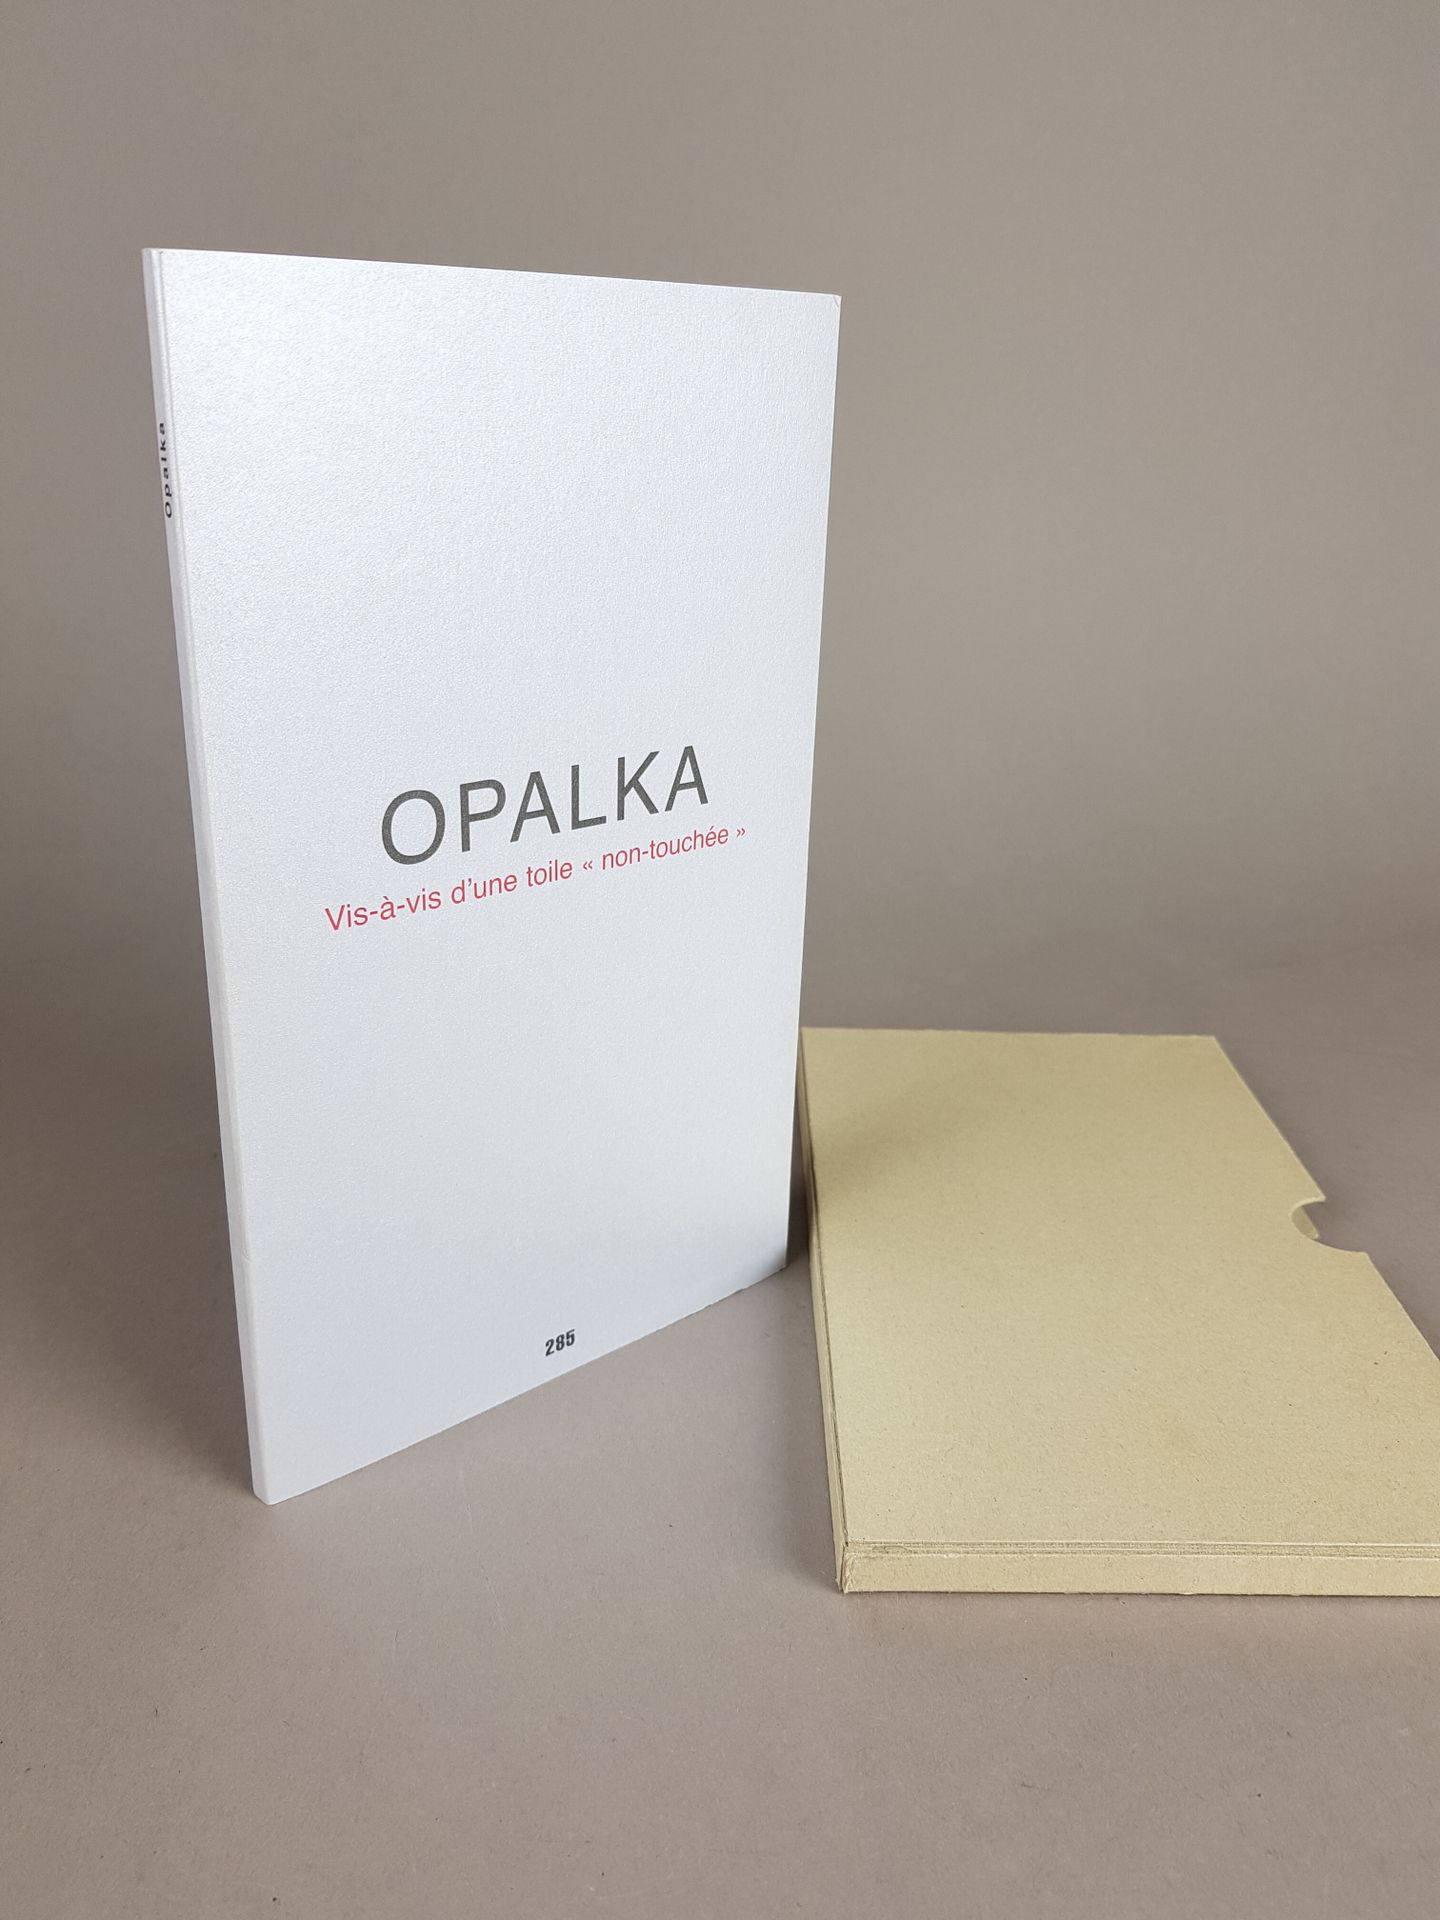 Null 艺术家的书 - 罗曼-奥帕尔卡

"相对于一个 "未触及的 "画布来说

版本Jannink

高5 x 21厘米